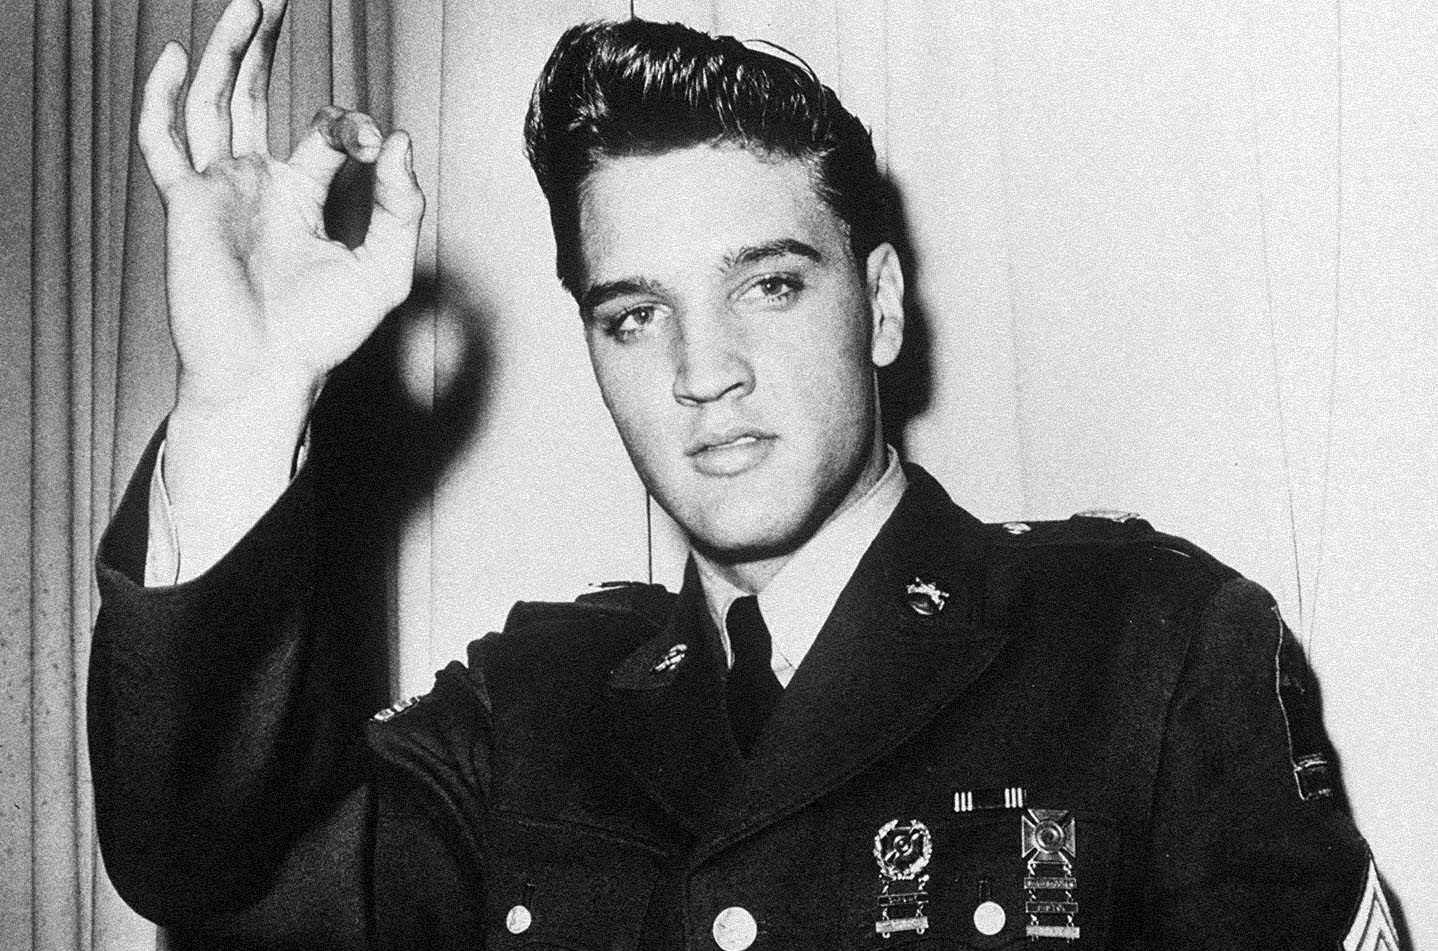 Elvis Presley had a big festive hit with "Blue Christmas".